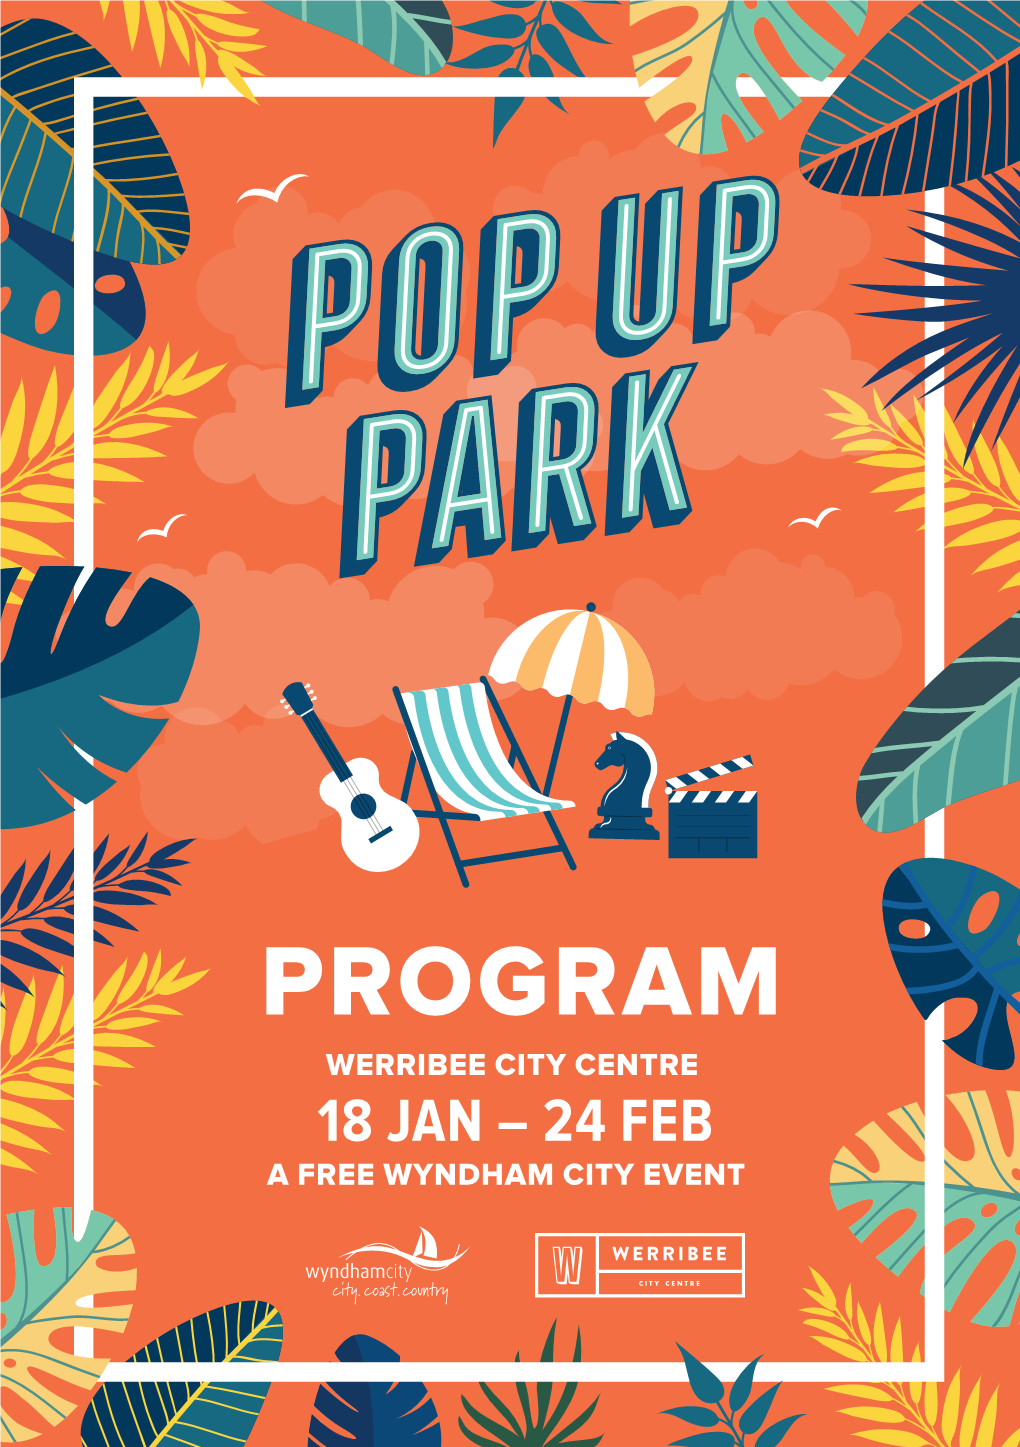 Pop up Park Online Program.Pdf